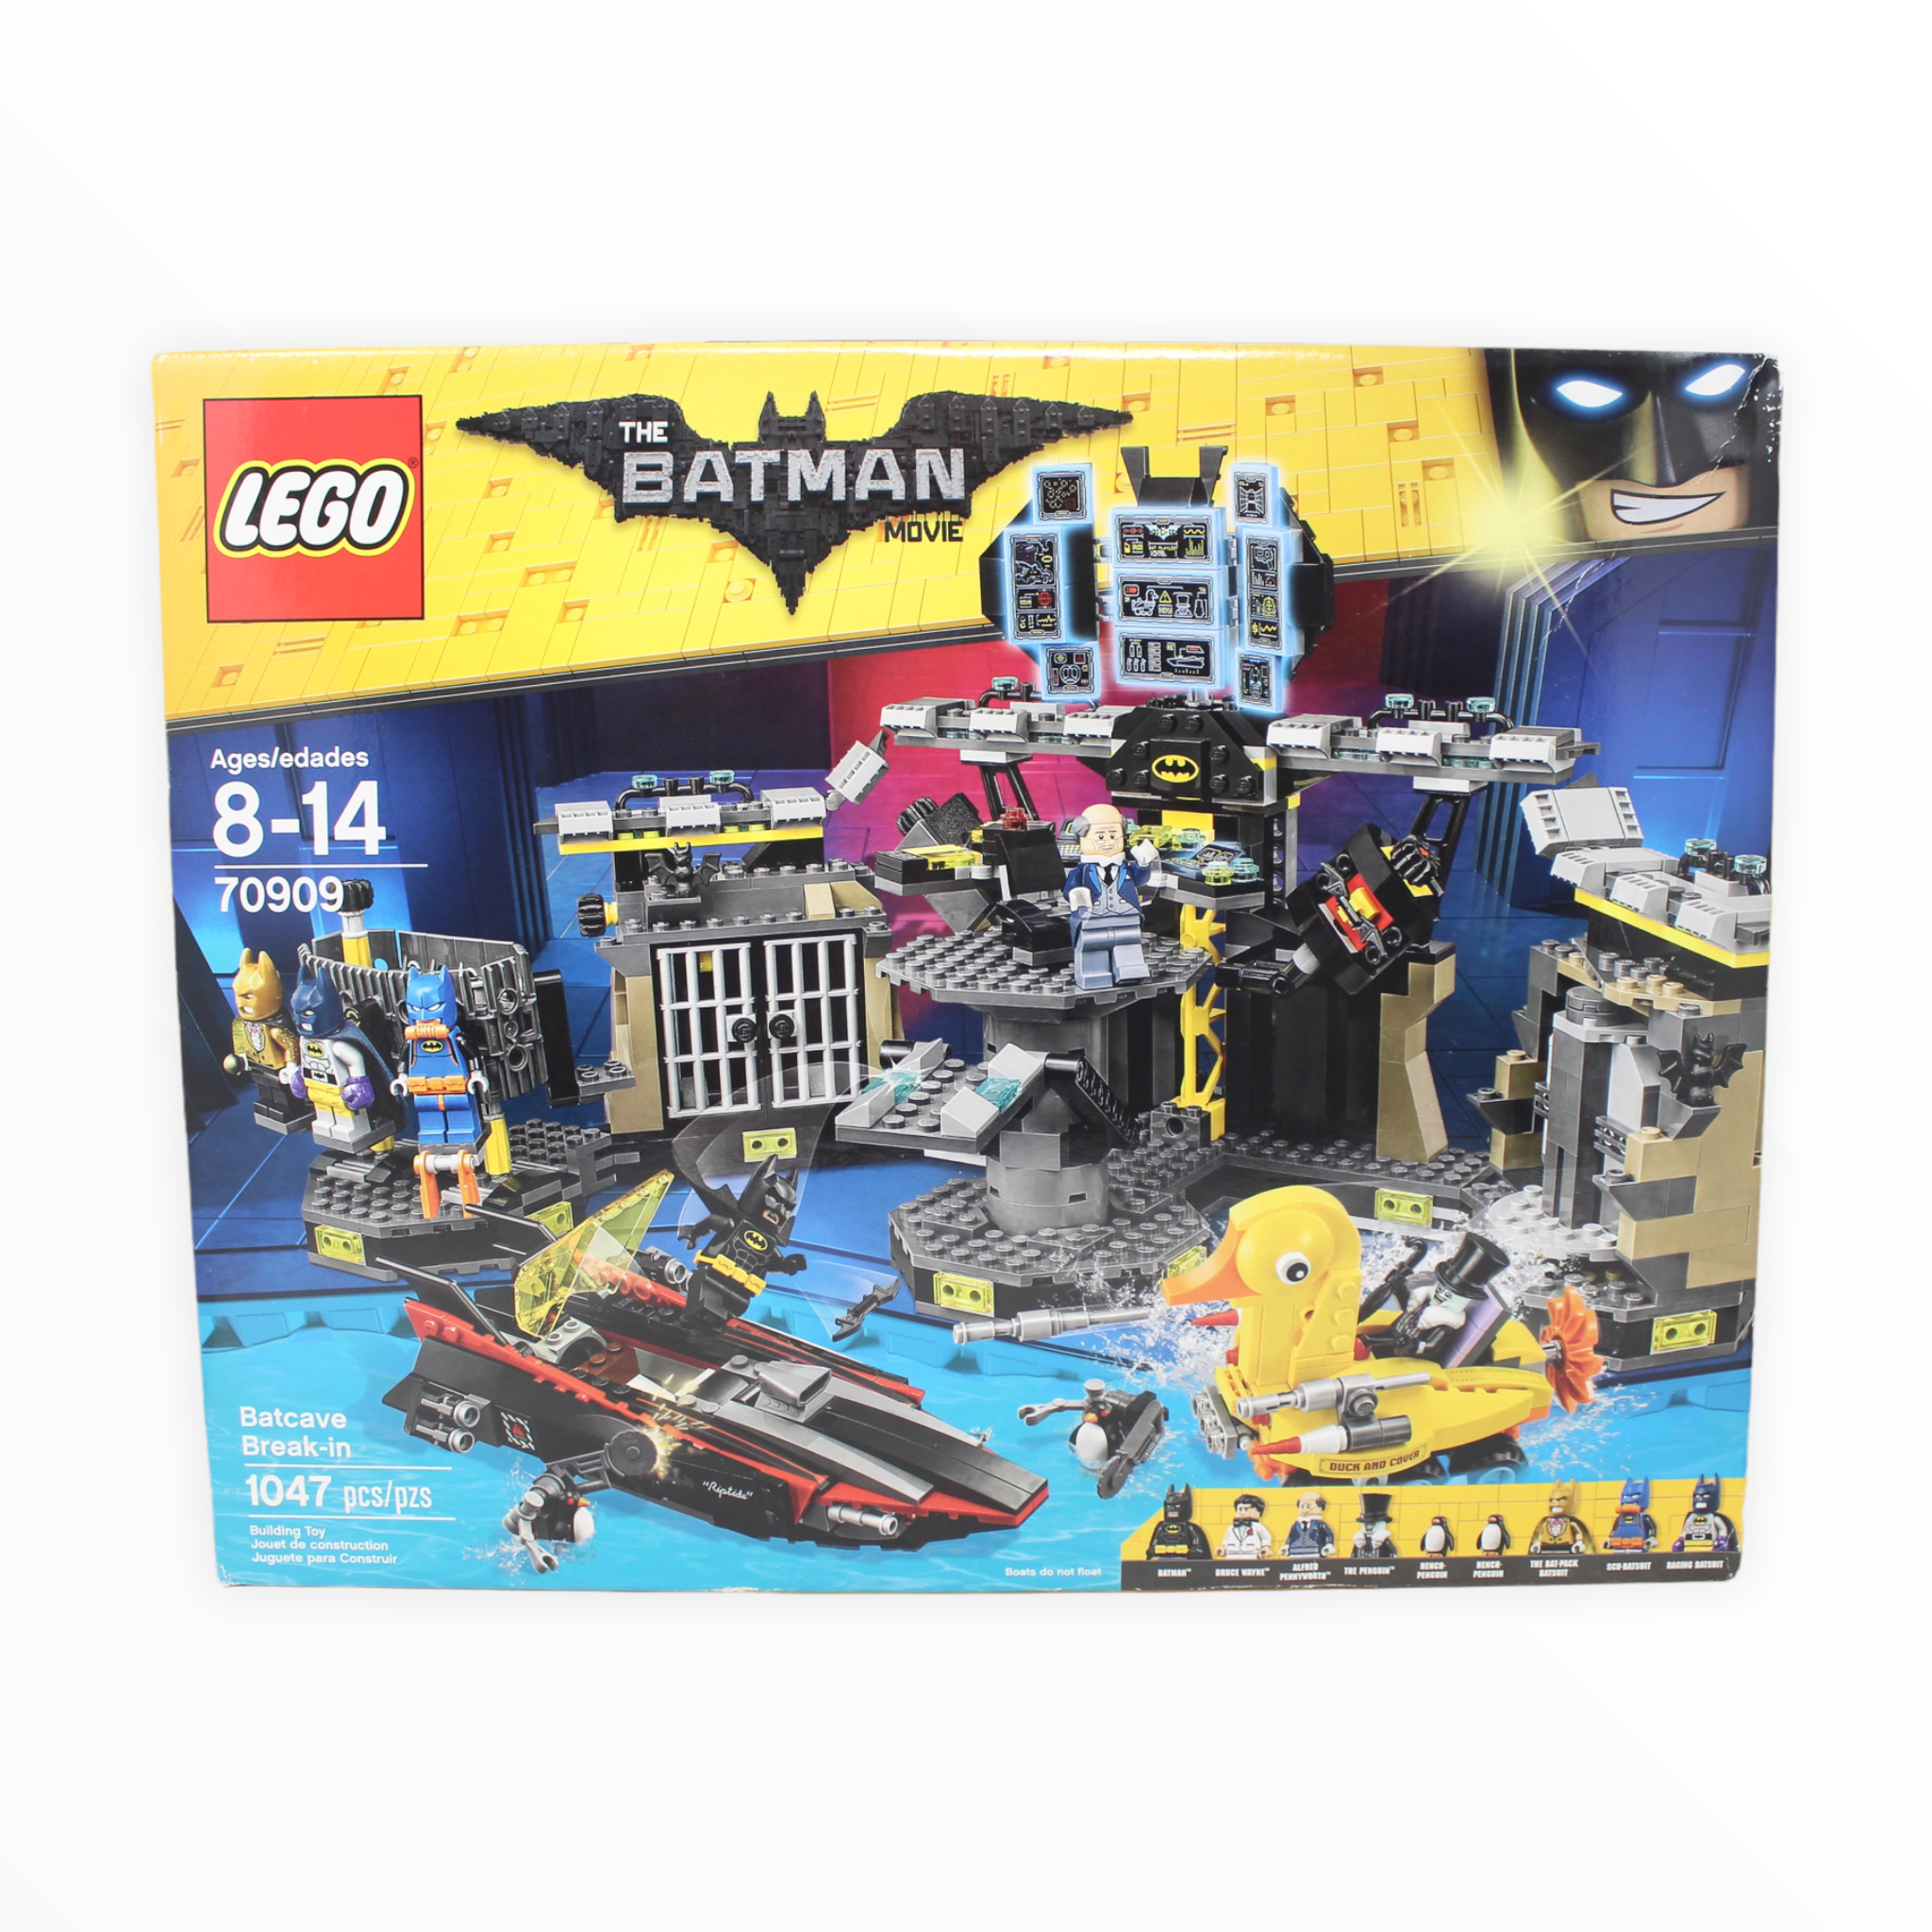 Retired Set 70909 The LEGO Batman Movie Batcave Break-in